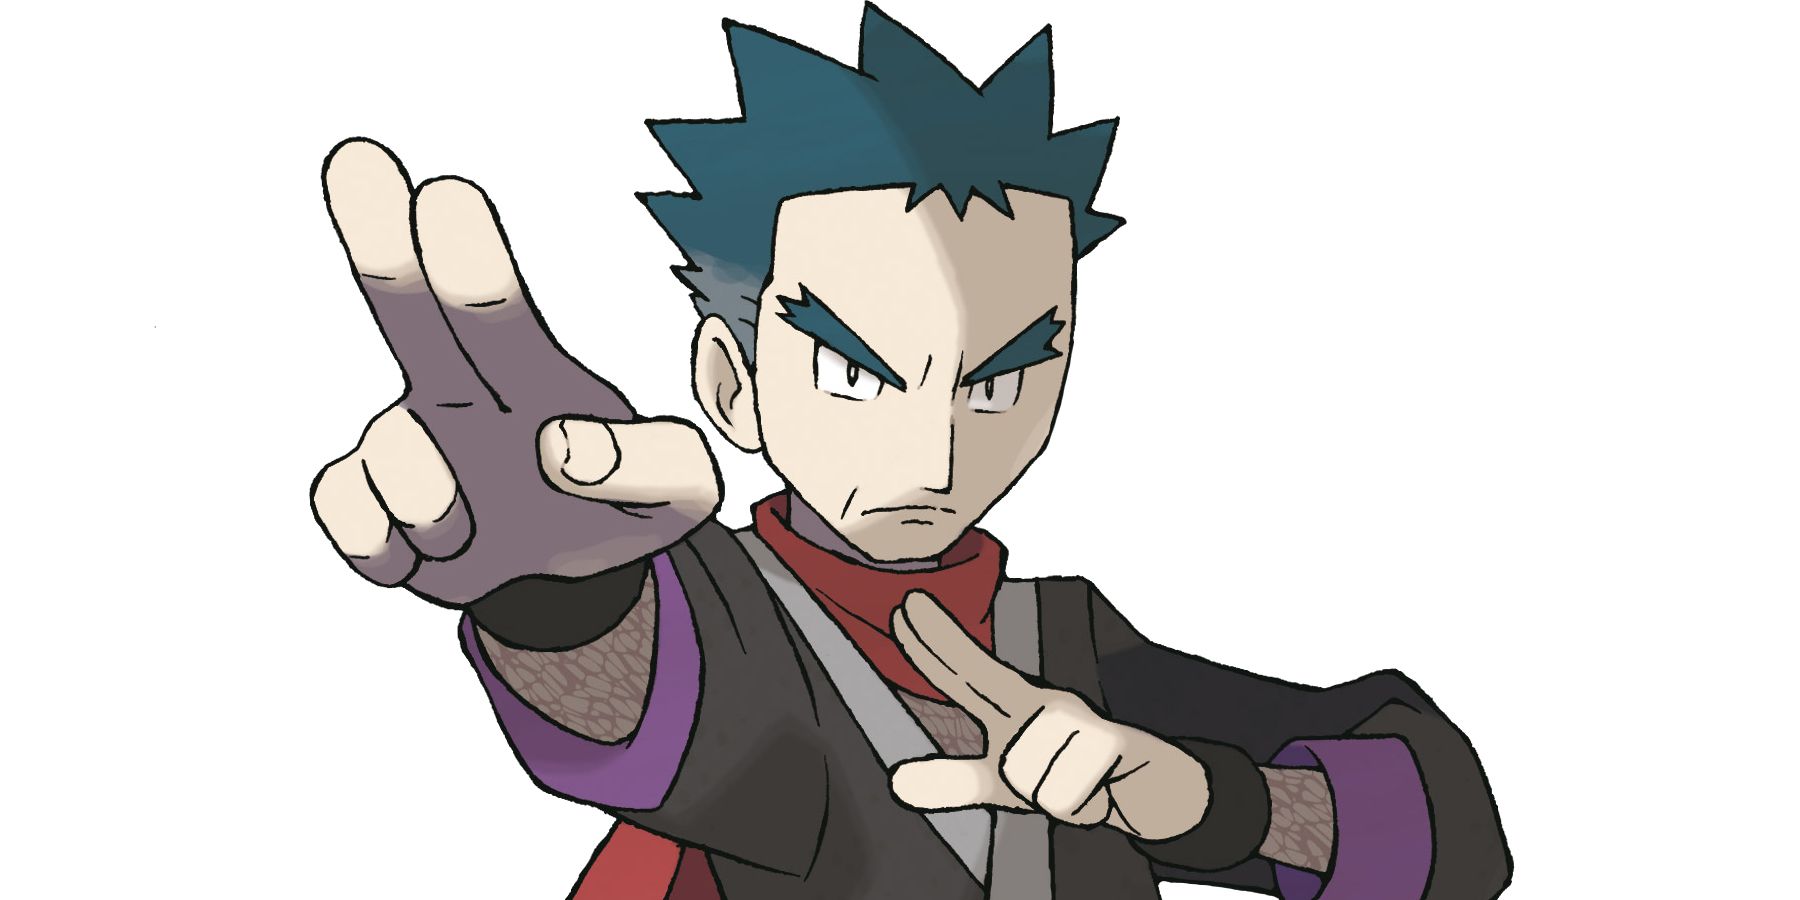 Koga posing in the Pokémon games